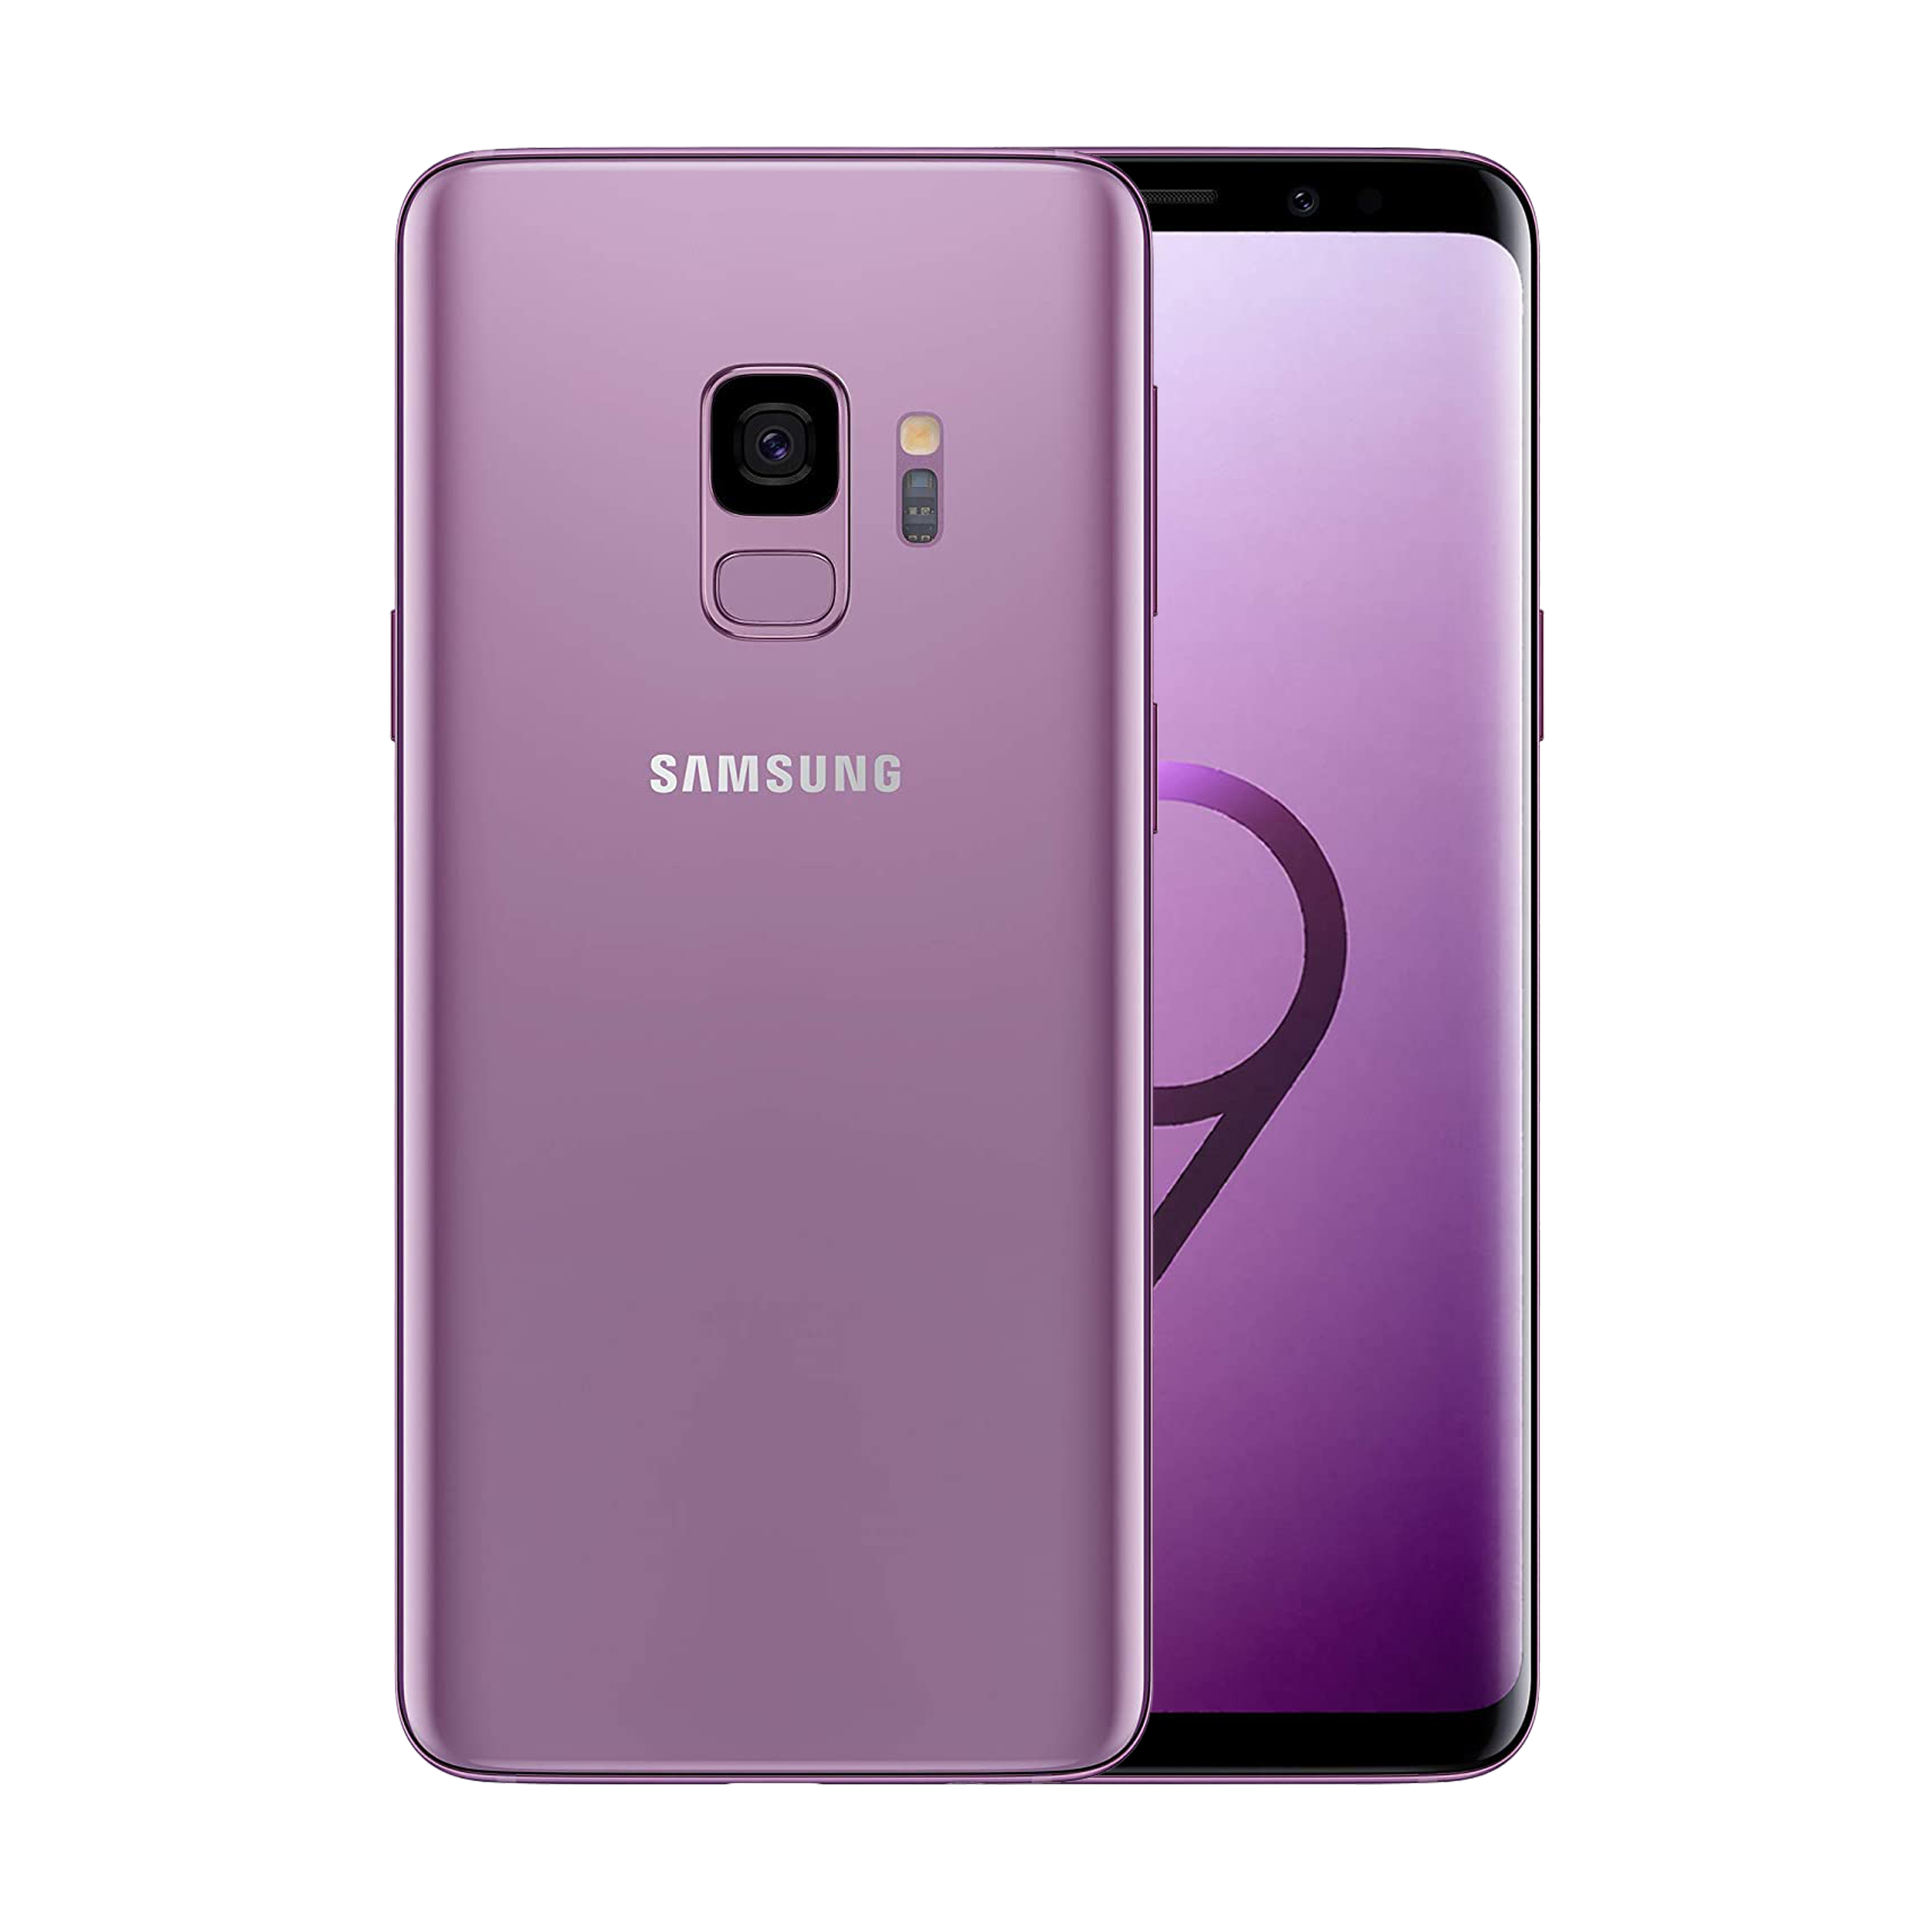 Samsung Galaxy S9 64GB Purple Very good - Unlocked